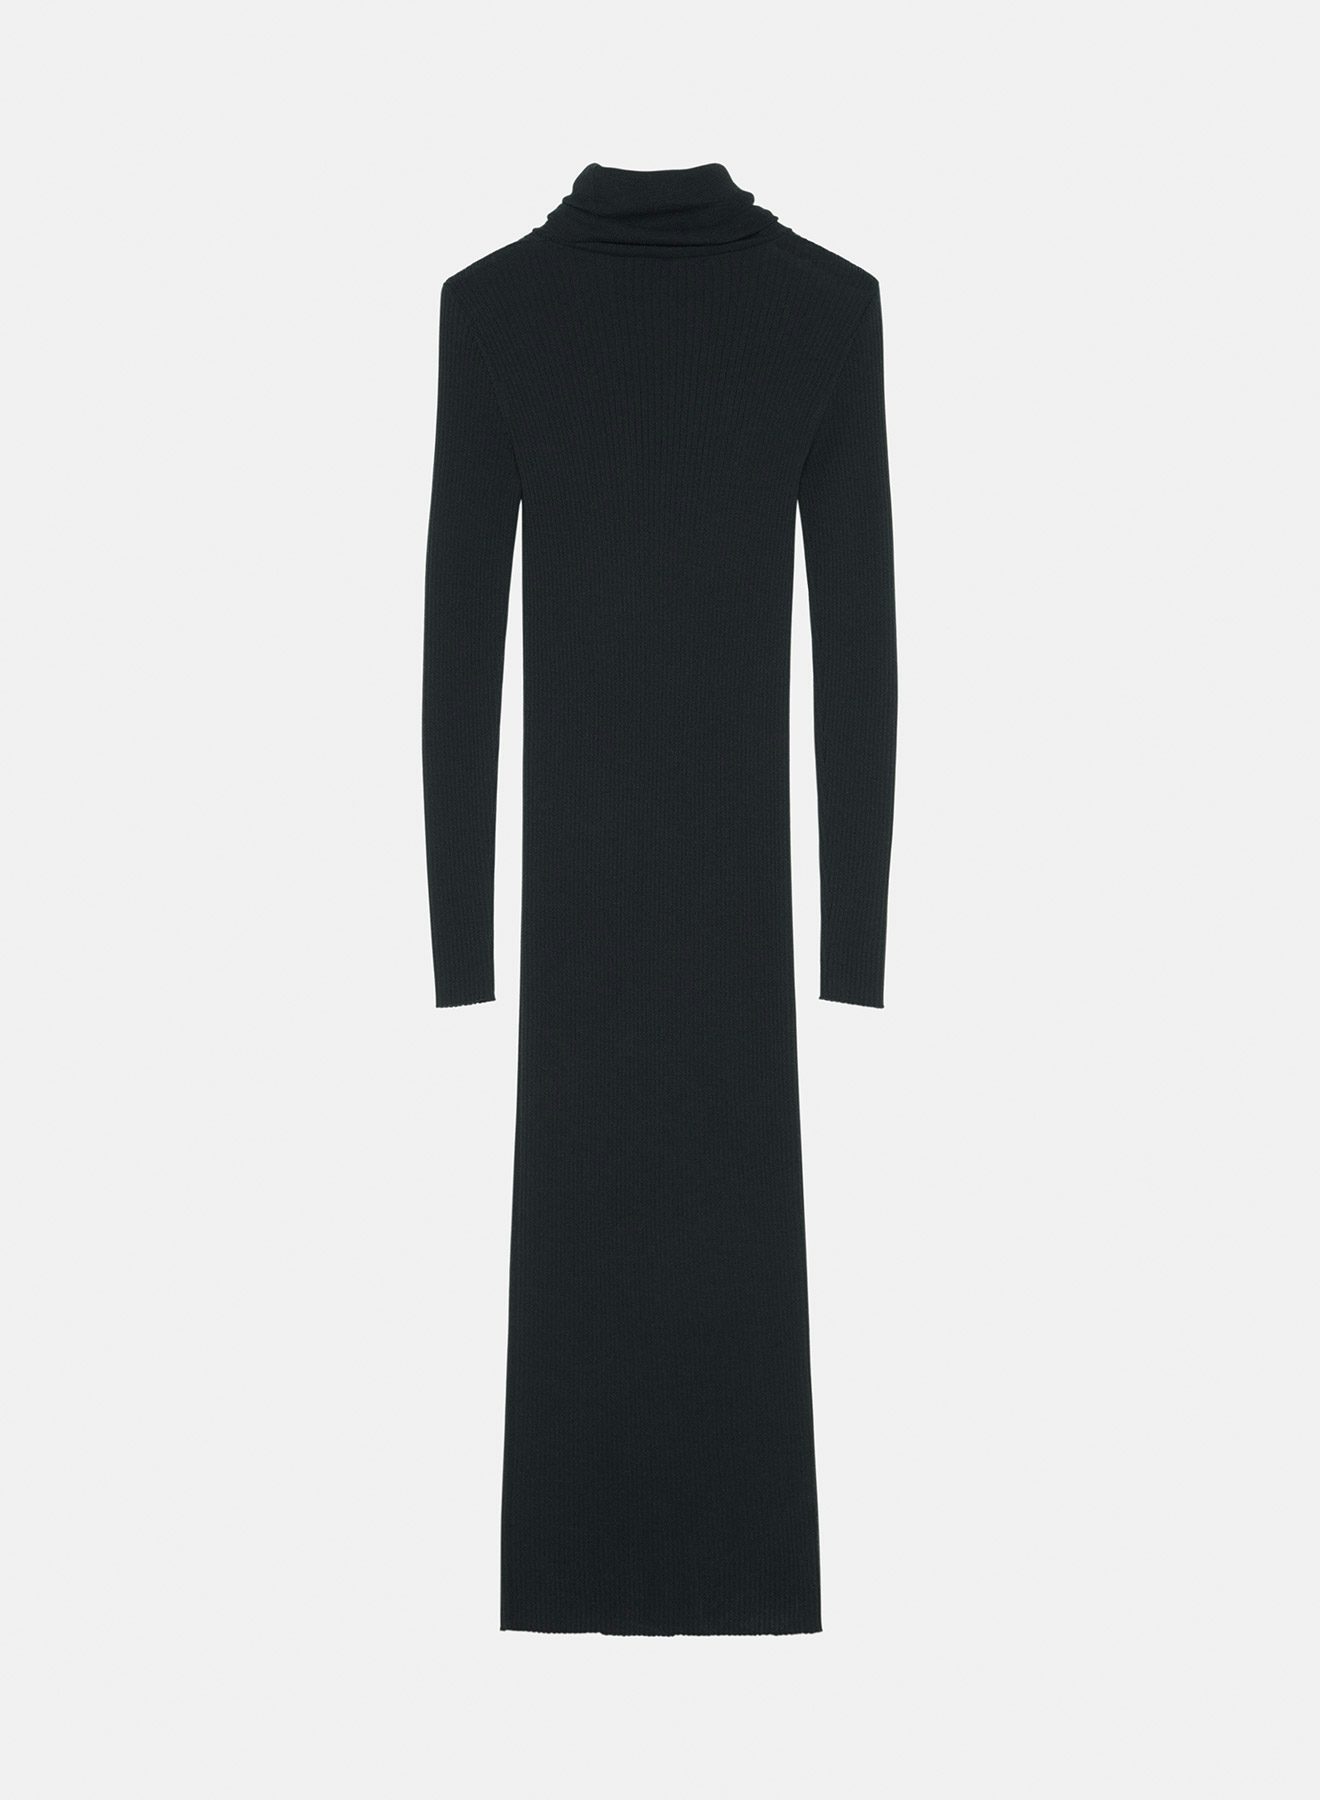 Wool and cashmere ribs dress black - Nina Ricci